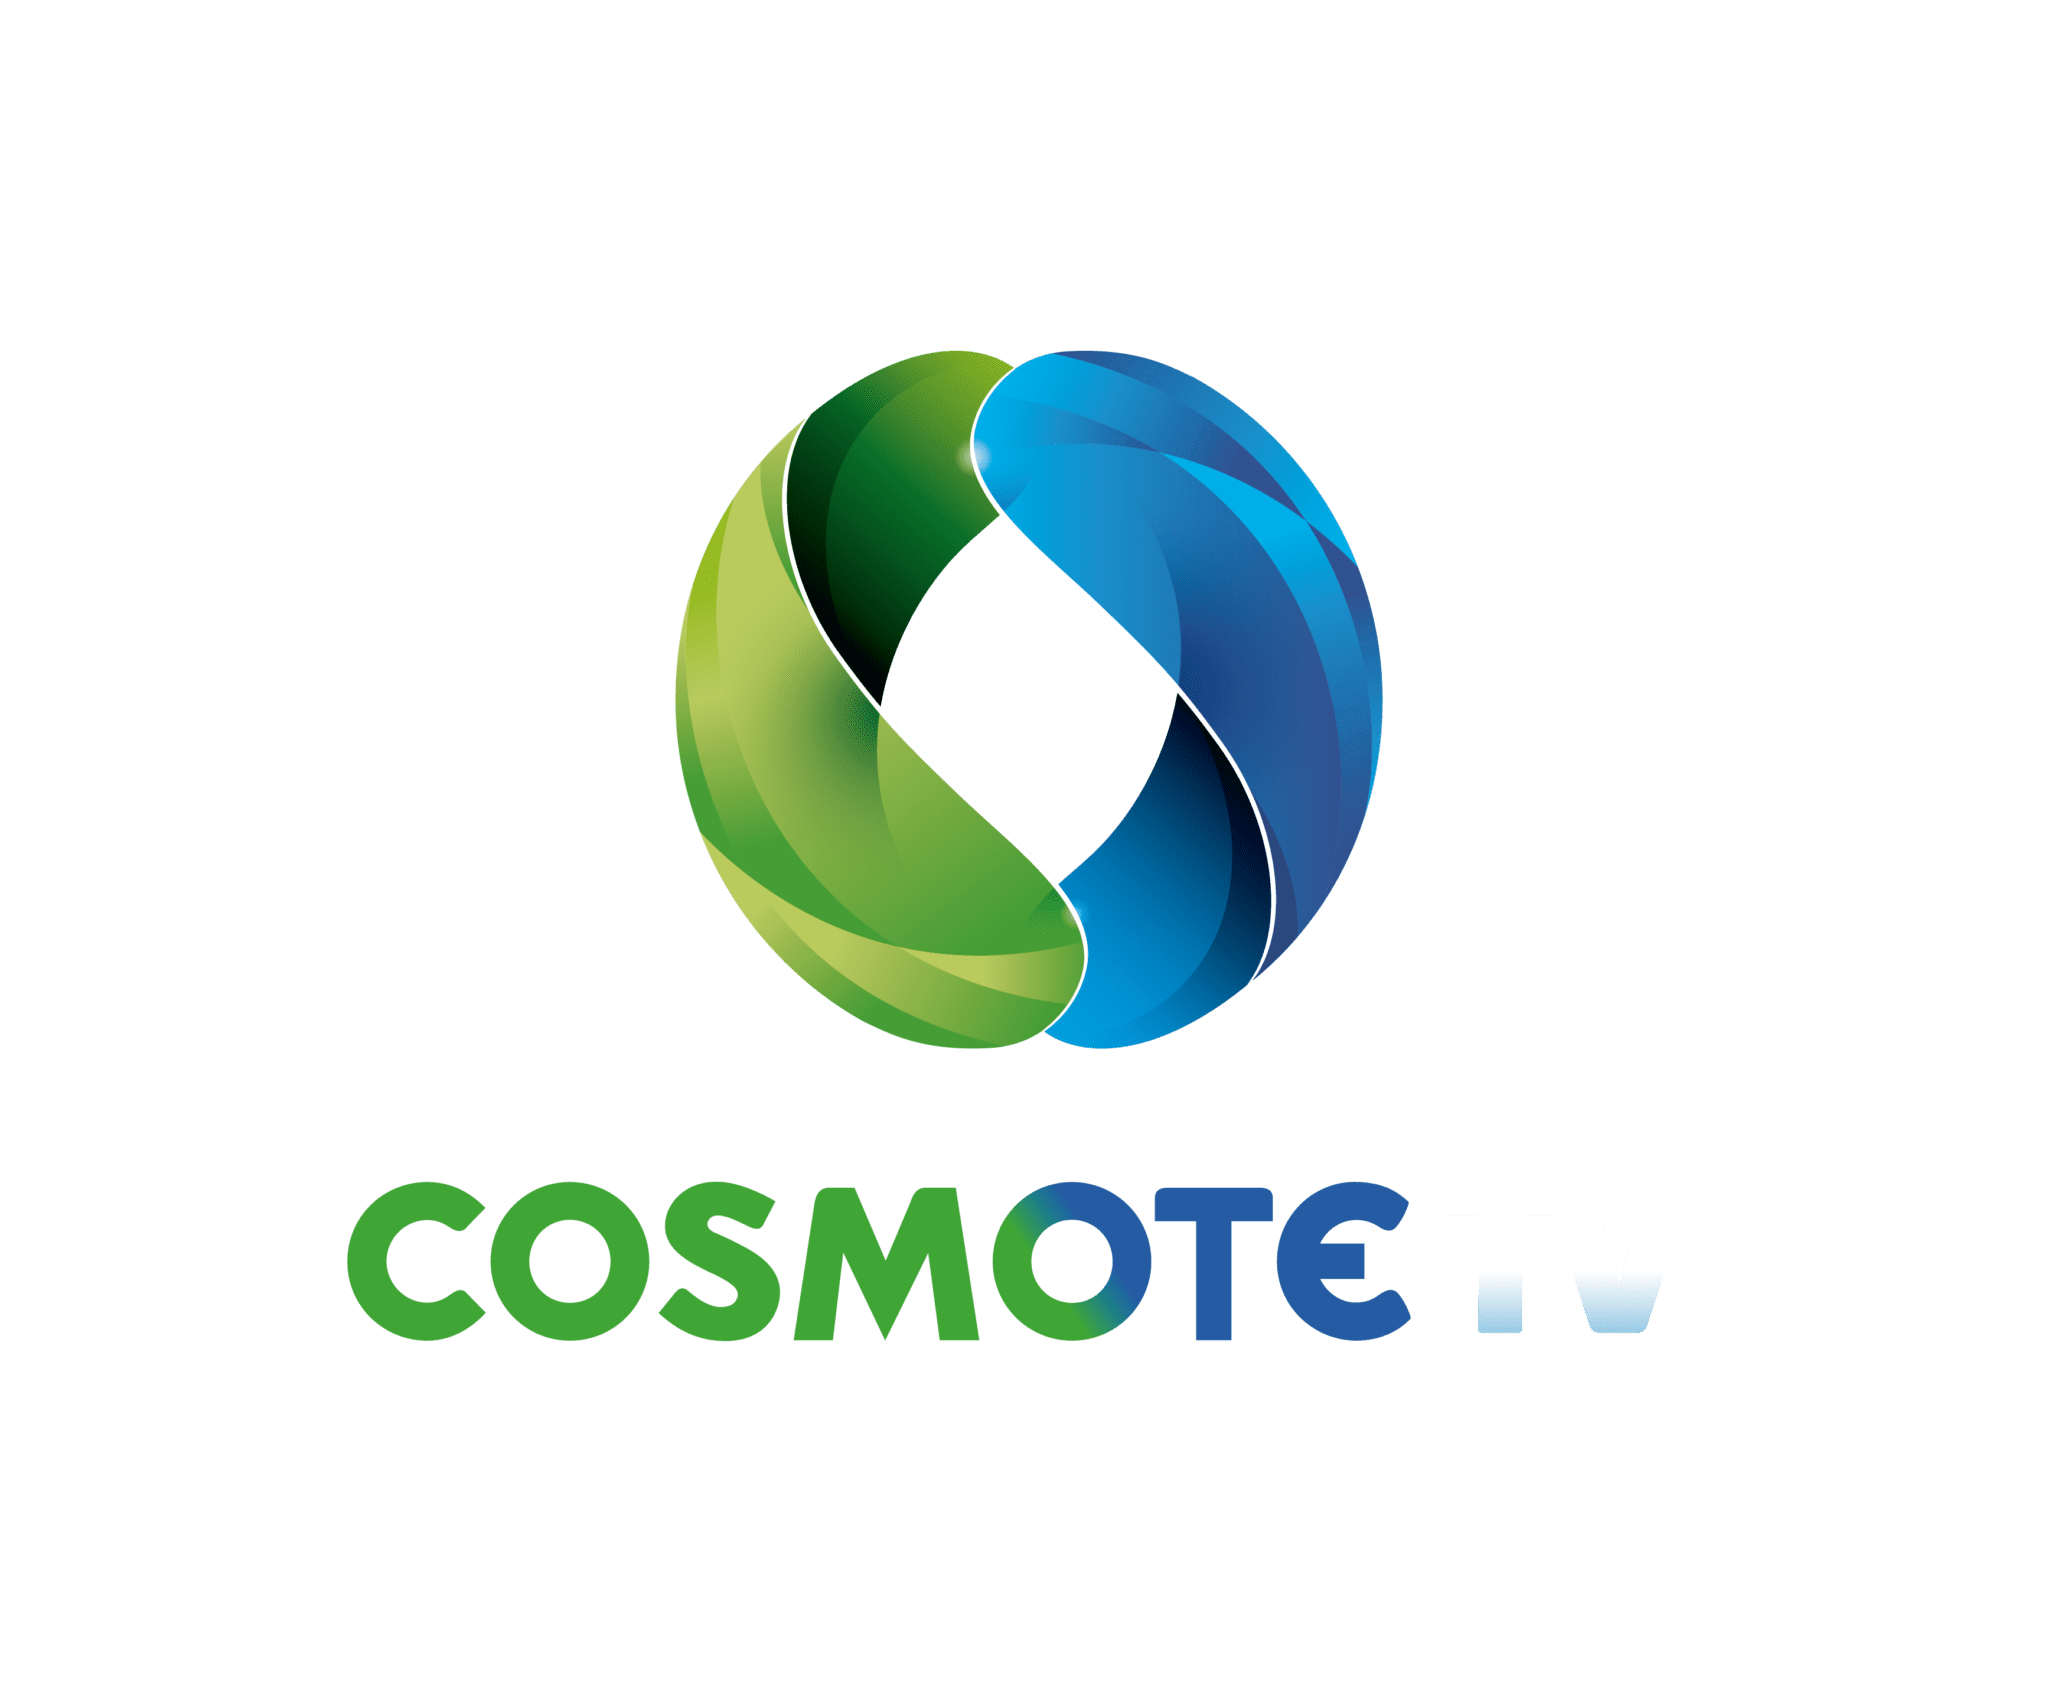 COSMOTE TV LOGO